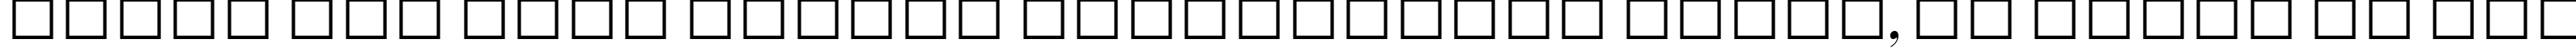 Пример написания шрифтом Bodoni MT Condensed Bold Italic текста на русском